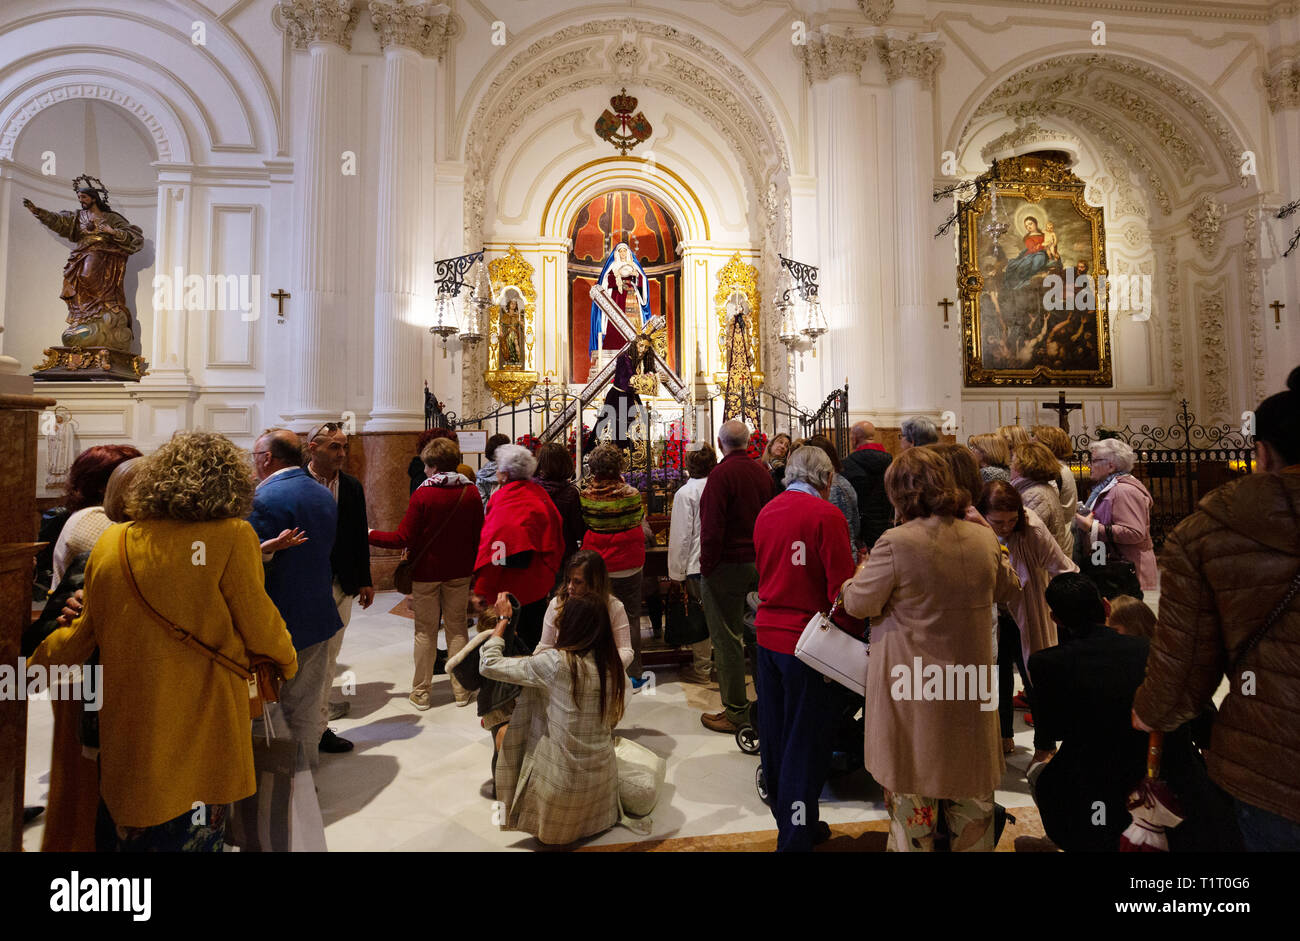 People in a chapel, interior of the Iglesia de Santiago (Church of Santiago), the oldest Roman Catholic church in Malaga, Andalucia, Spain Europe Stock Photo